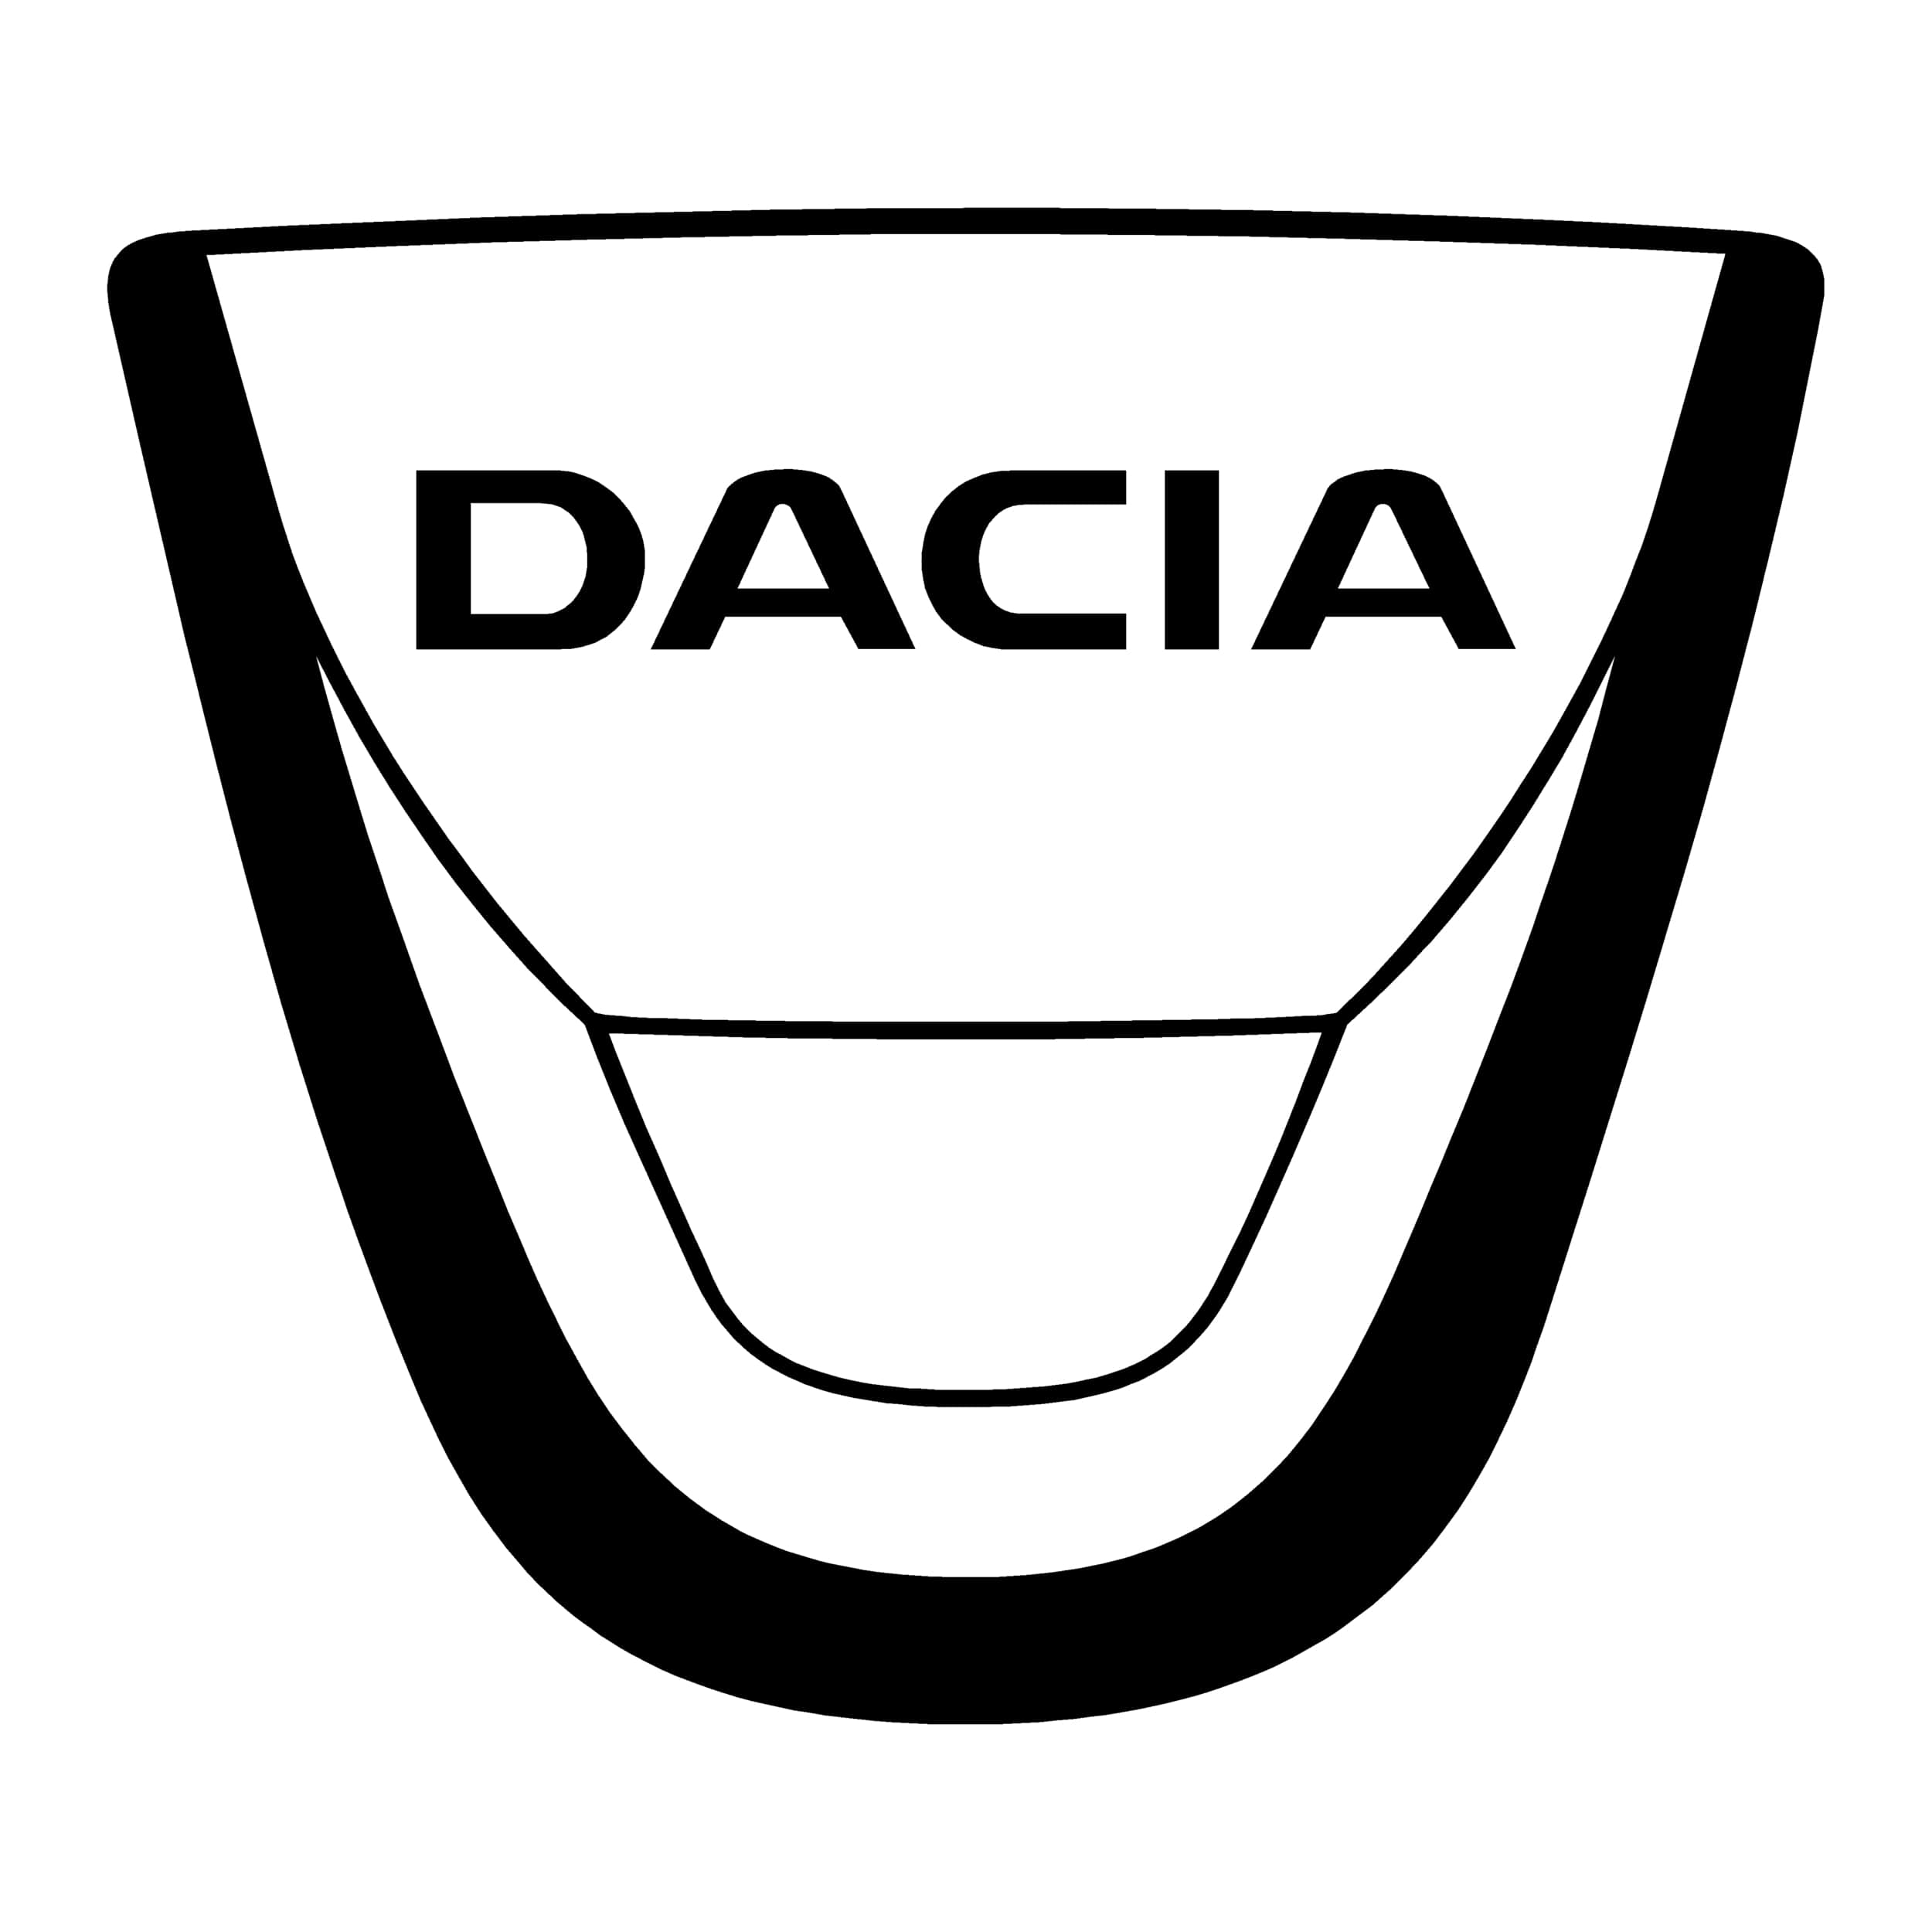 stickers-dacia-ref-10-auto-sport-racing-tuning-amortisseur-tout-terrain-auto-camion-competition-rallye-autocollant-min